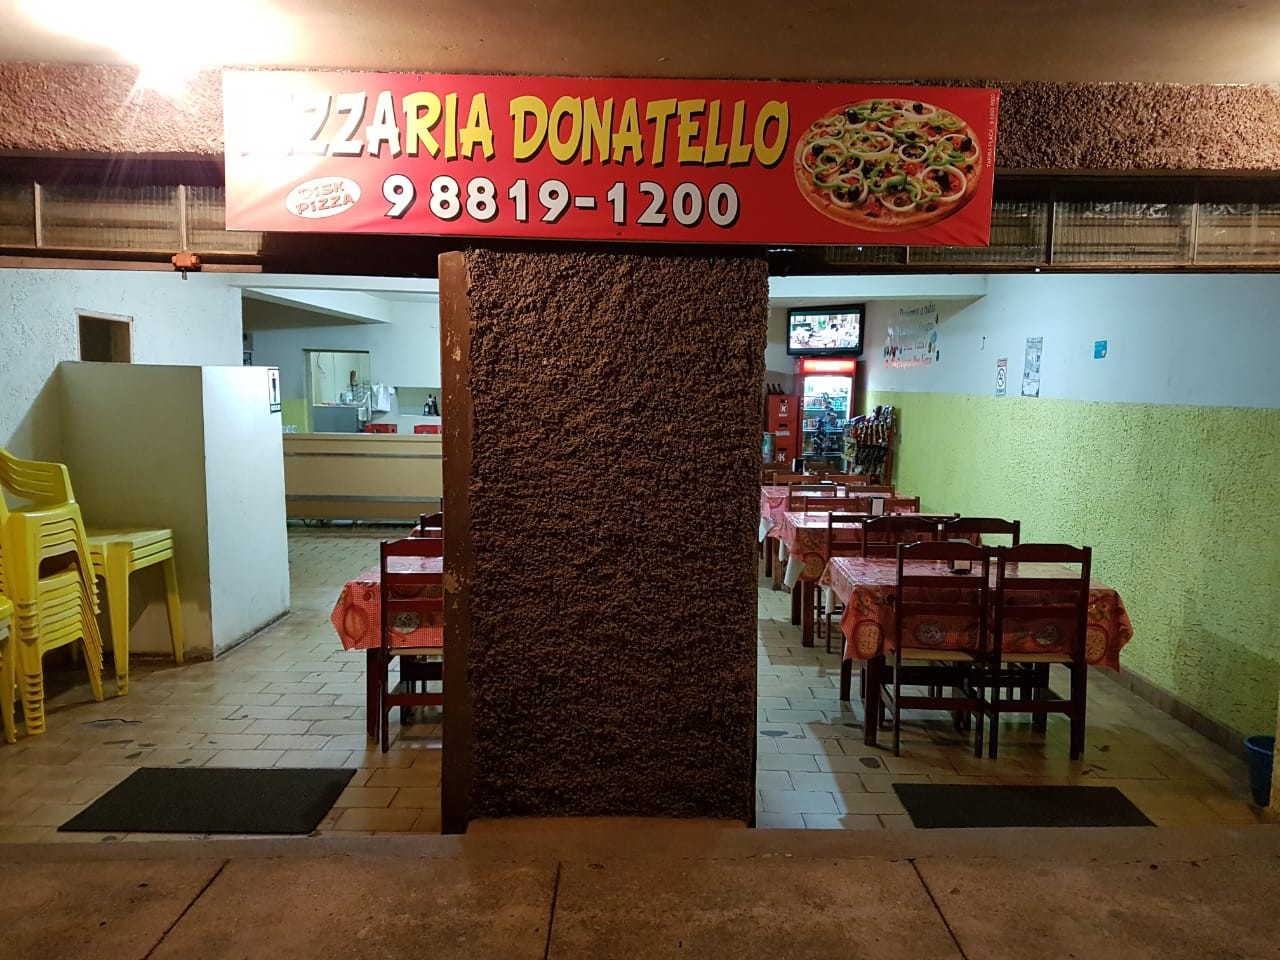 Donatello Pizzaria em Uberlândia Cardápio